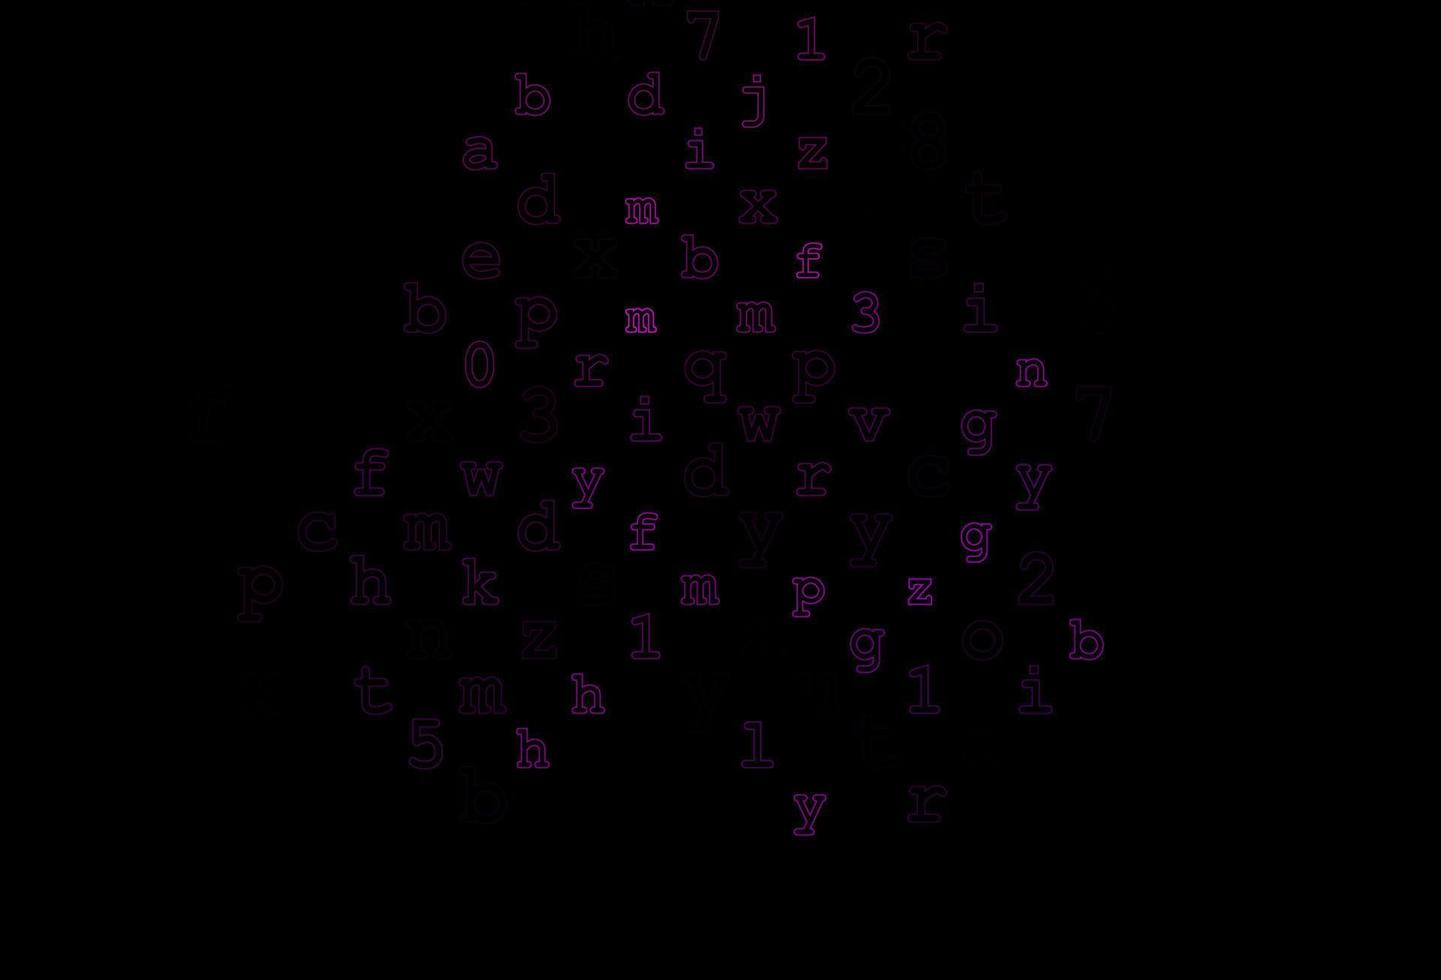 layout de vetor roxo escuro com alfabeto latino.